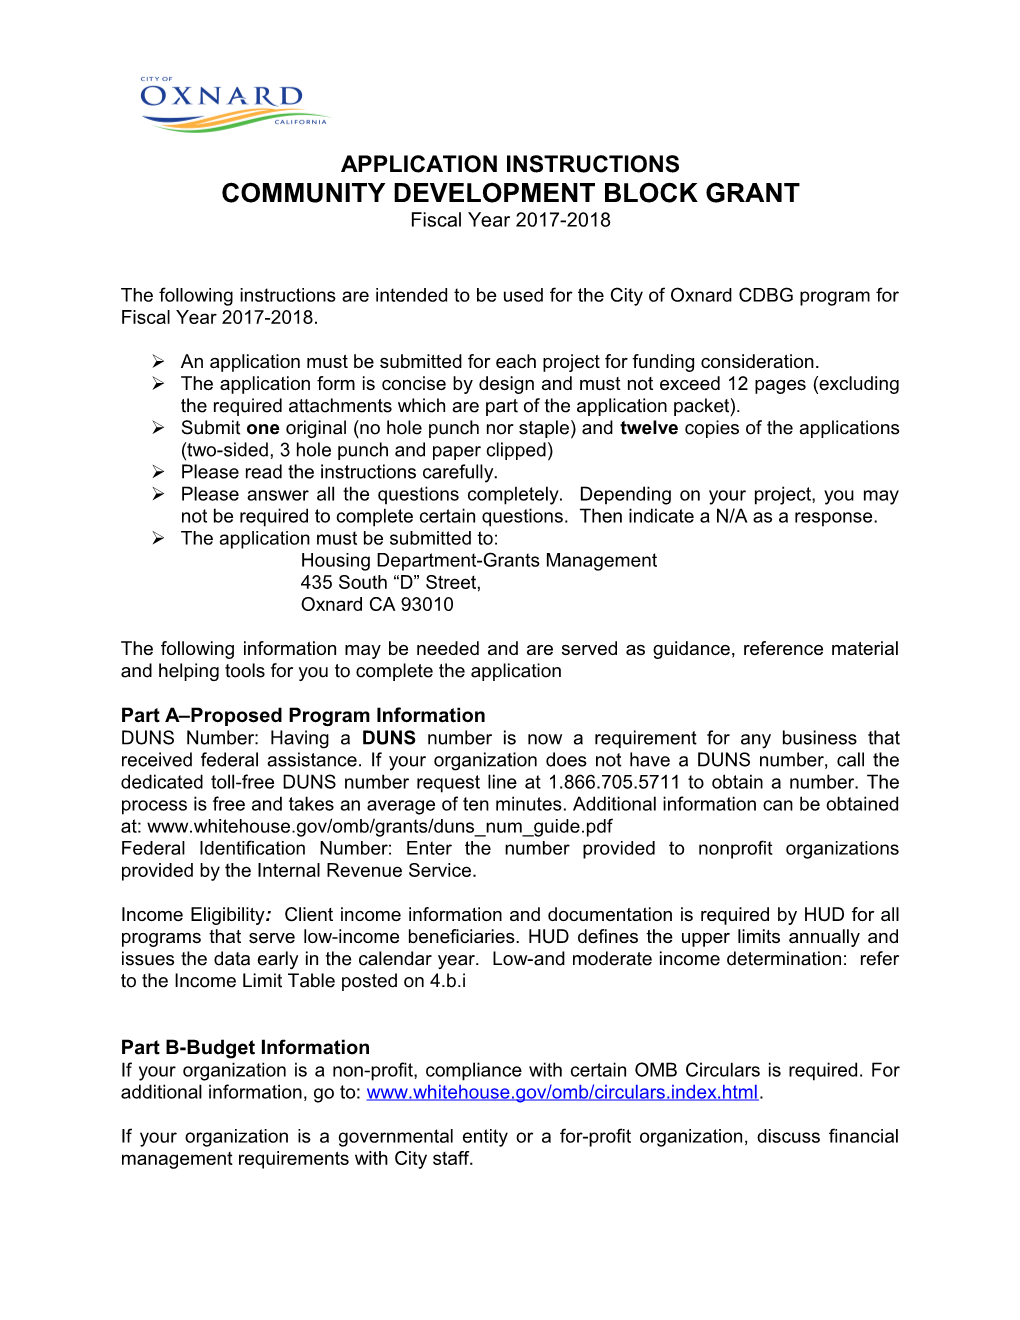 Community Development Block Grant s3